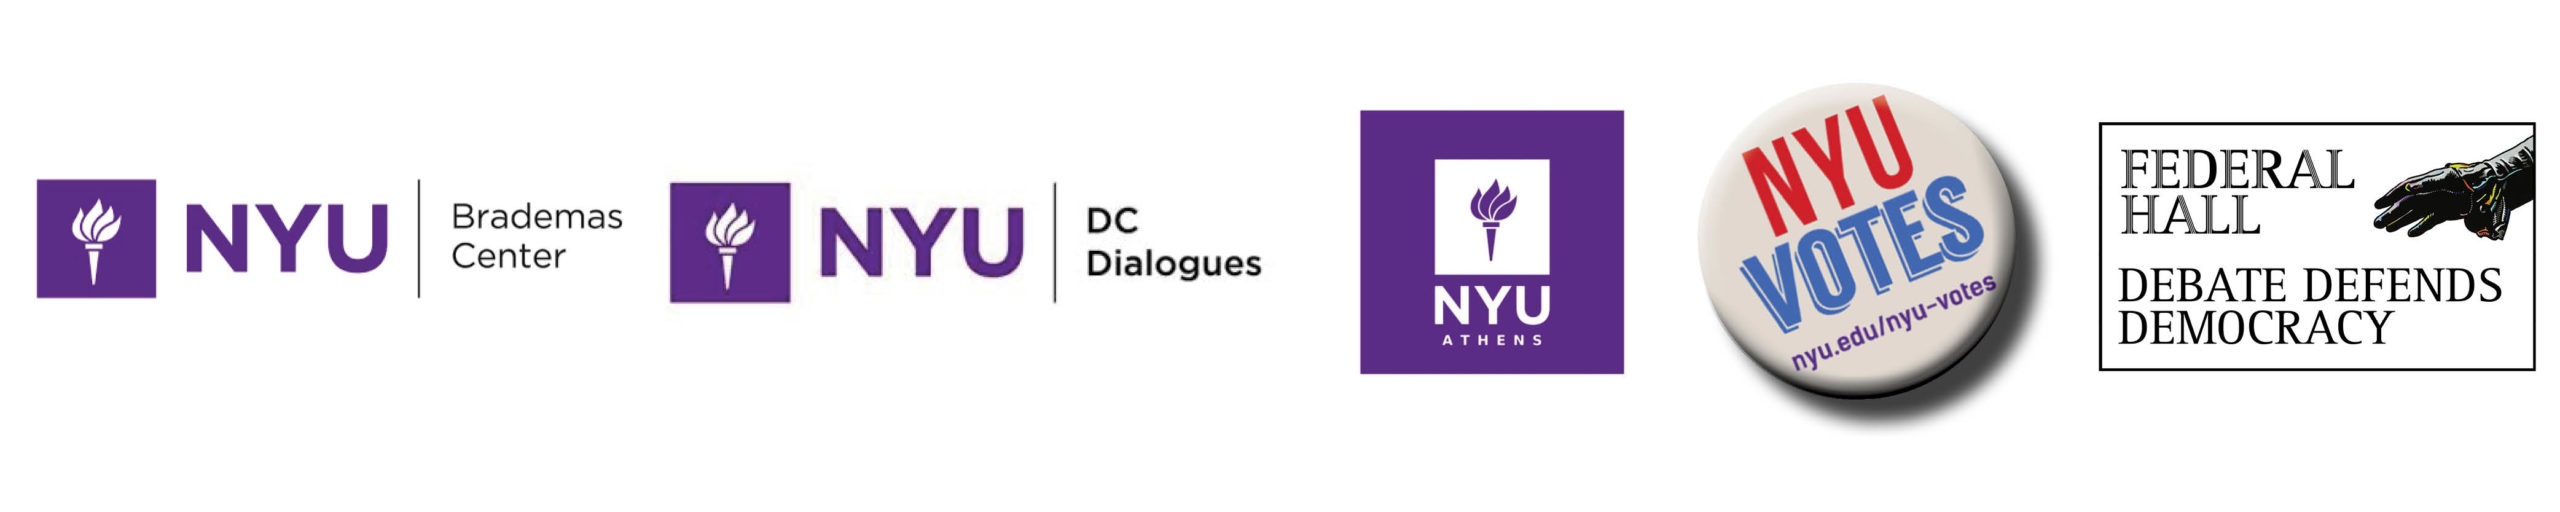 Logos: NYU Brademas Center, NYU DC Dialogues, NYU Athens, NYU Votes & Debate Defends Democracy